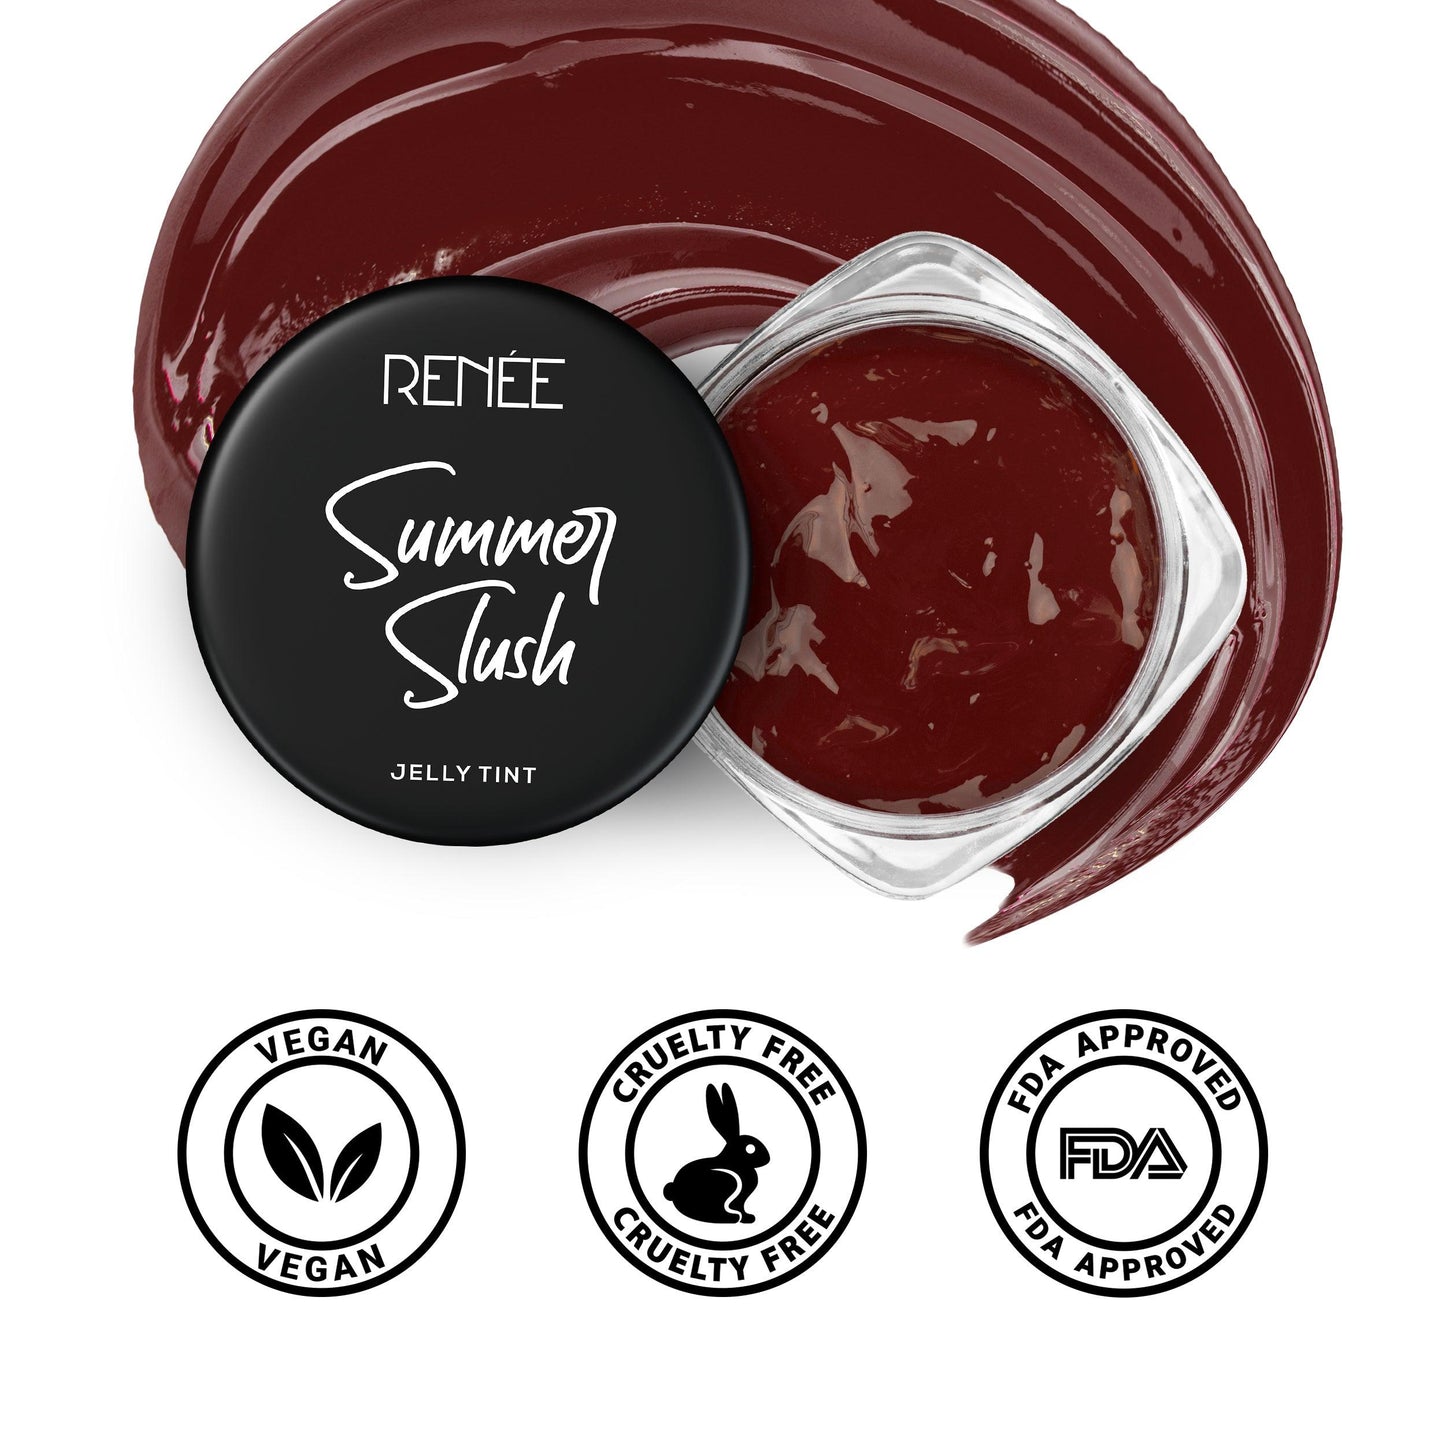 Renee Summer Slush Jelly Tint 13gm - Luscious Cherry